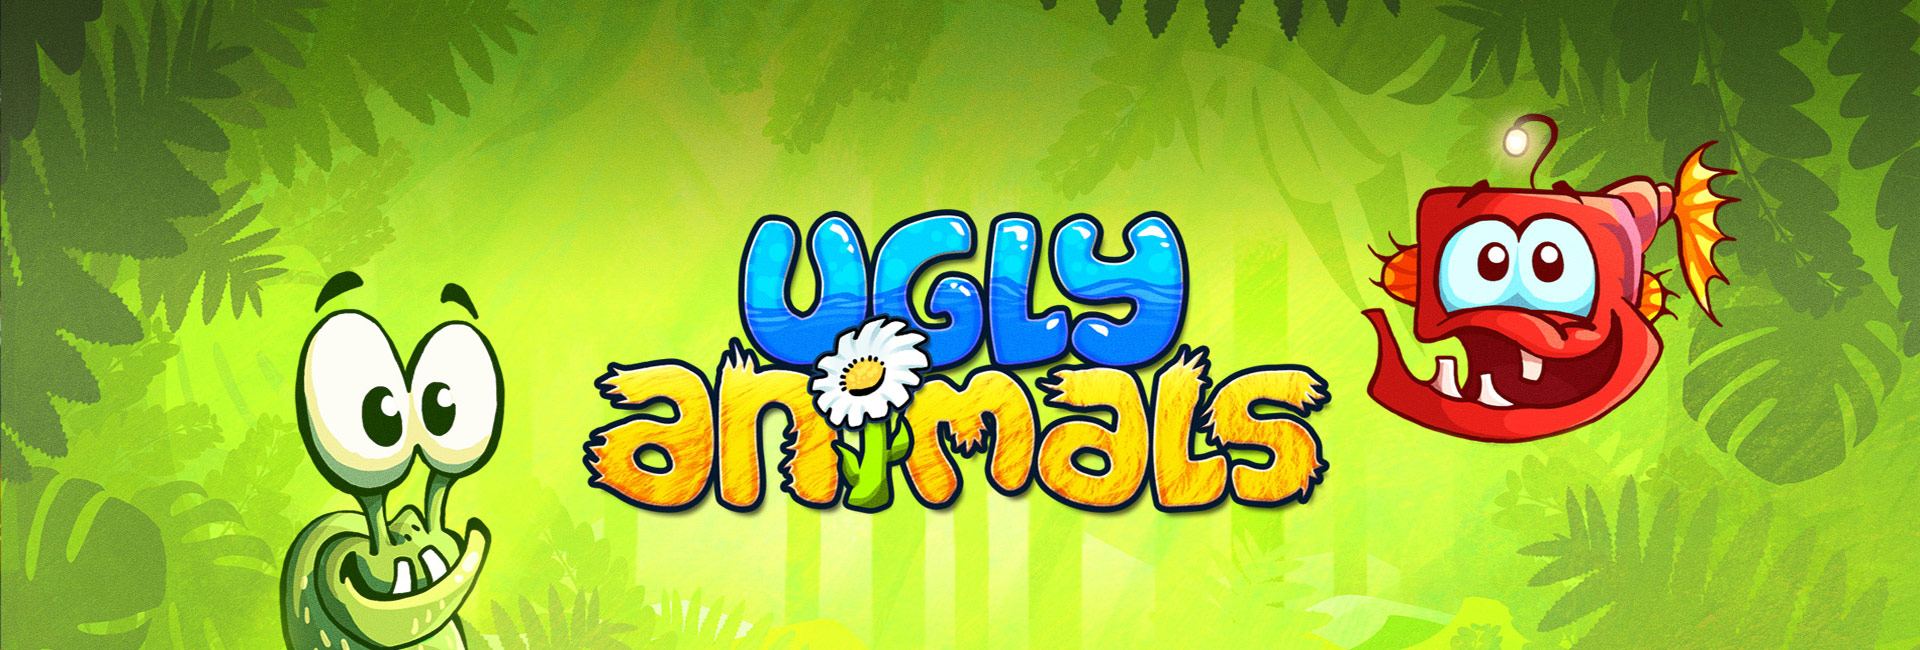 Ugly Animals